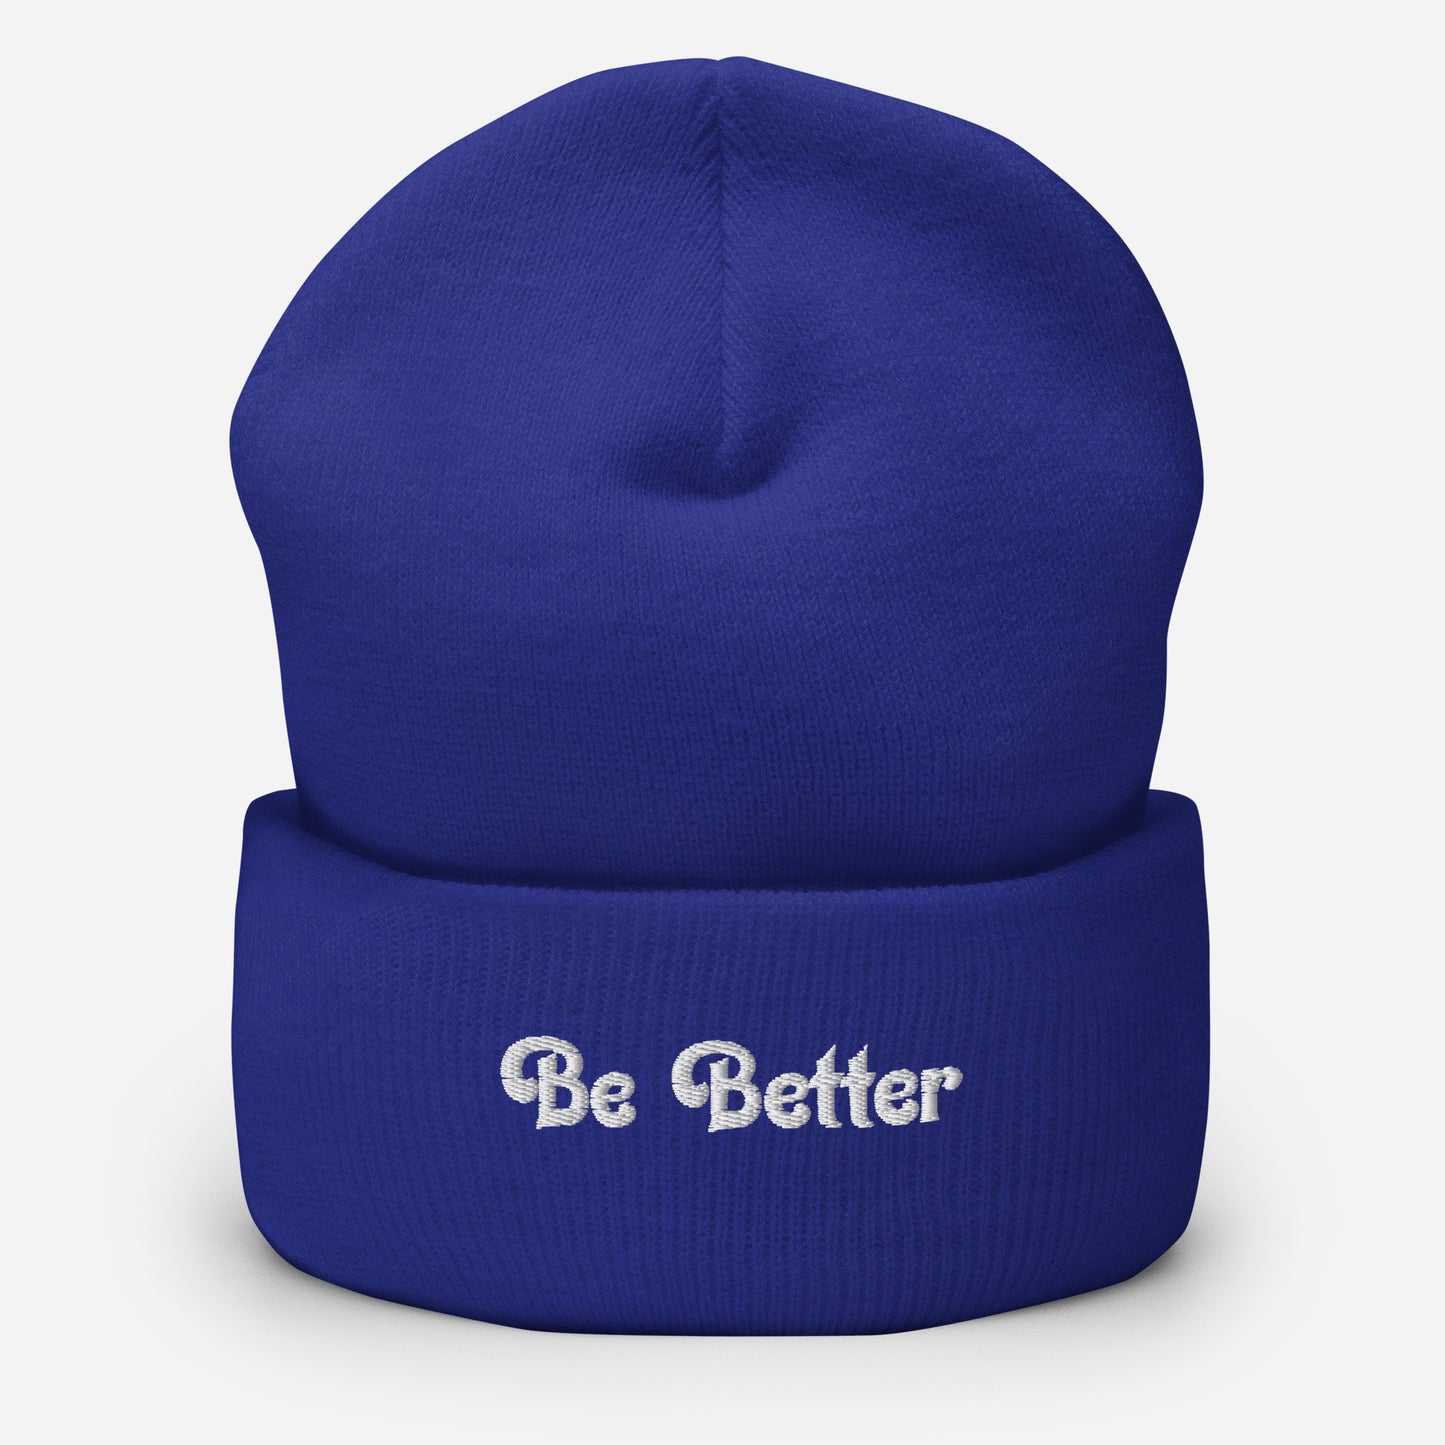 "Be Better" Cuffed Beanie